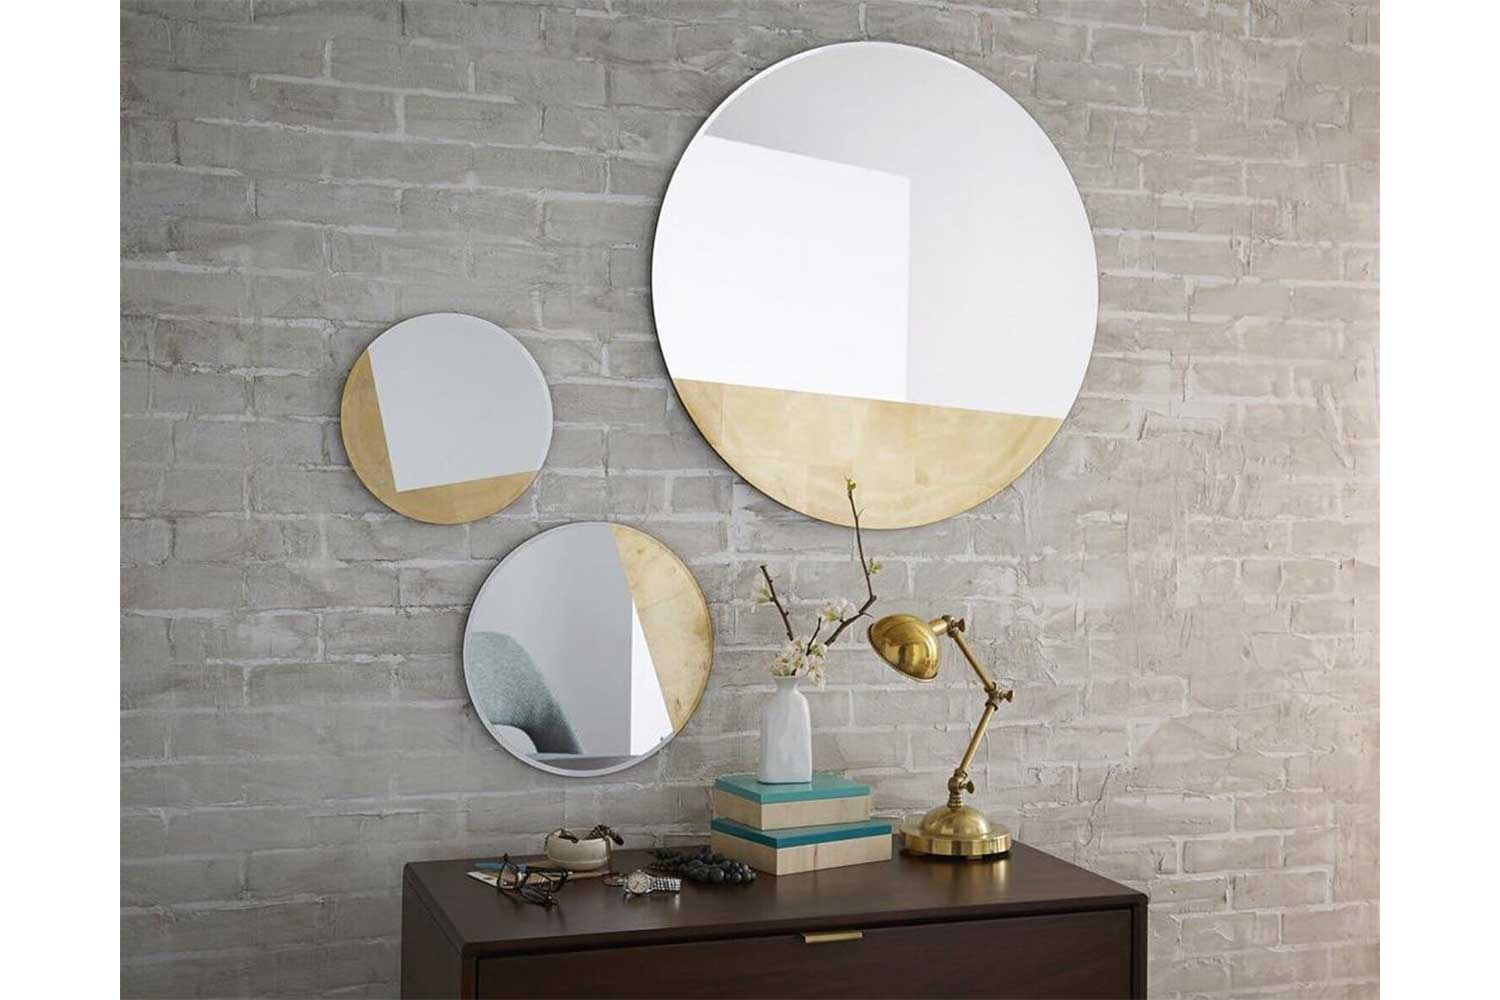 Мастер зеркал 3. Зеркало круглое. Круглое зеркало в интерьере. Круглые зеркала на стену. Три круглых зеркала в интерьере.